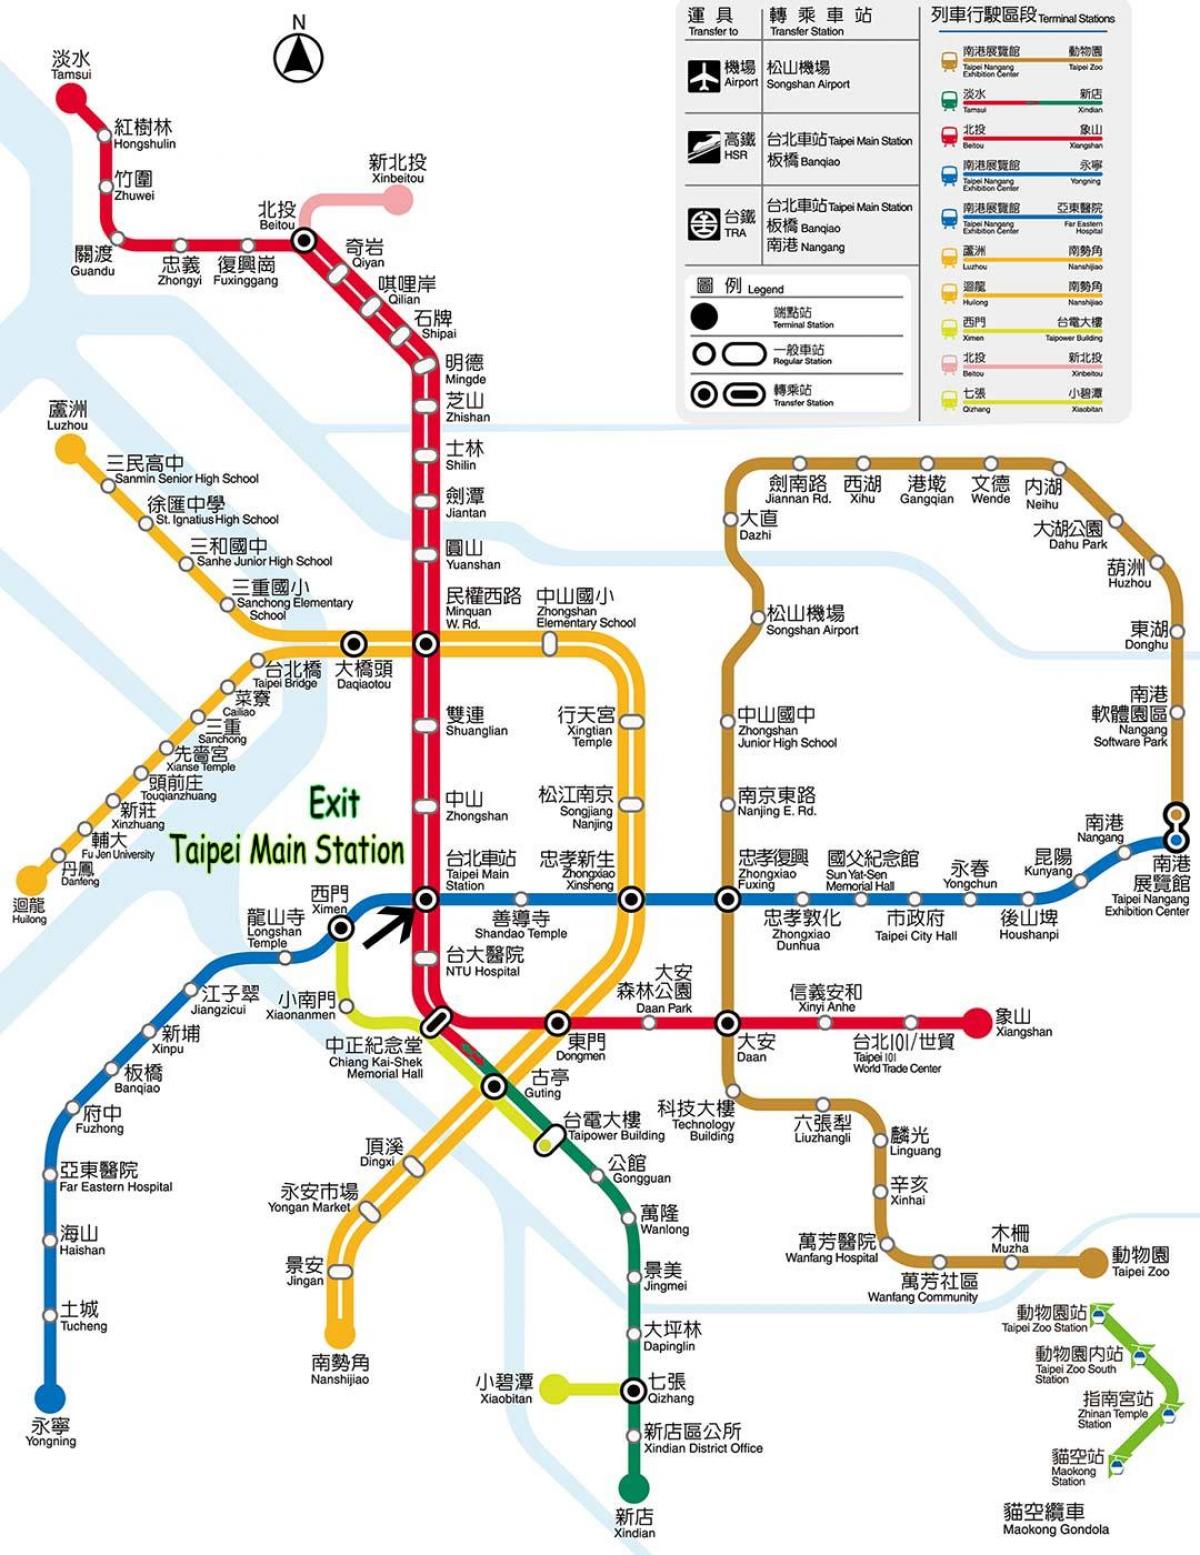 Het centraal station van Taipei ondergrondse winkelcentrum kaart